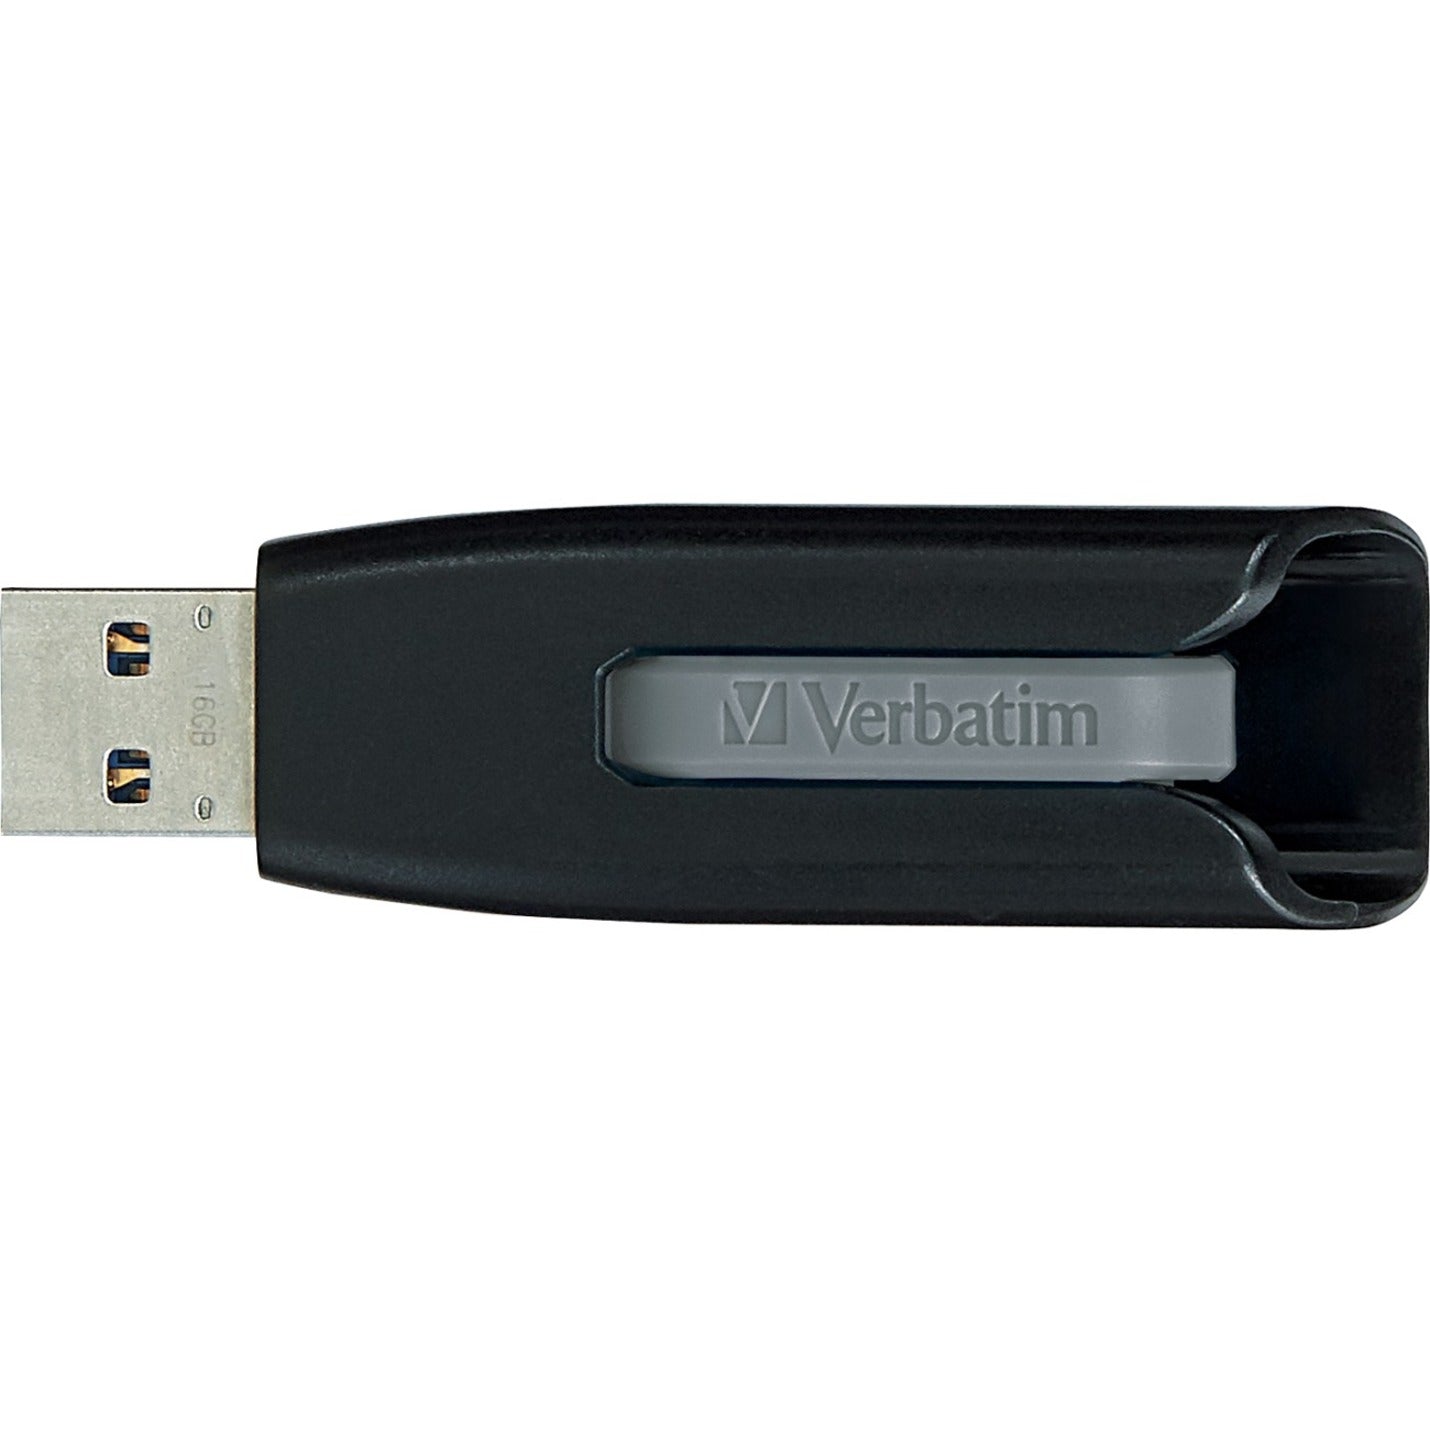 Microban 49189 Store 'n' Go V3 USB Drive 125GB Gray